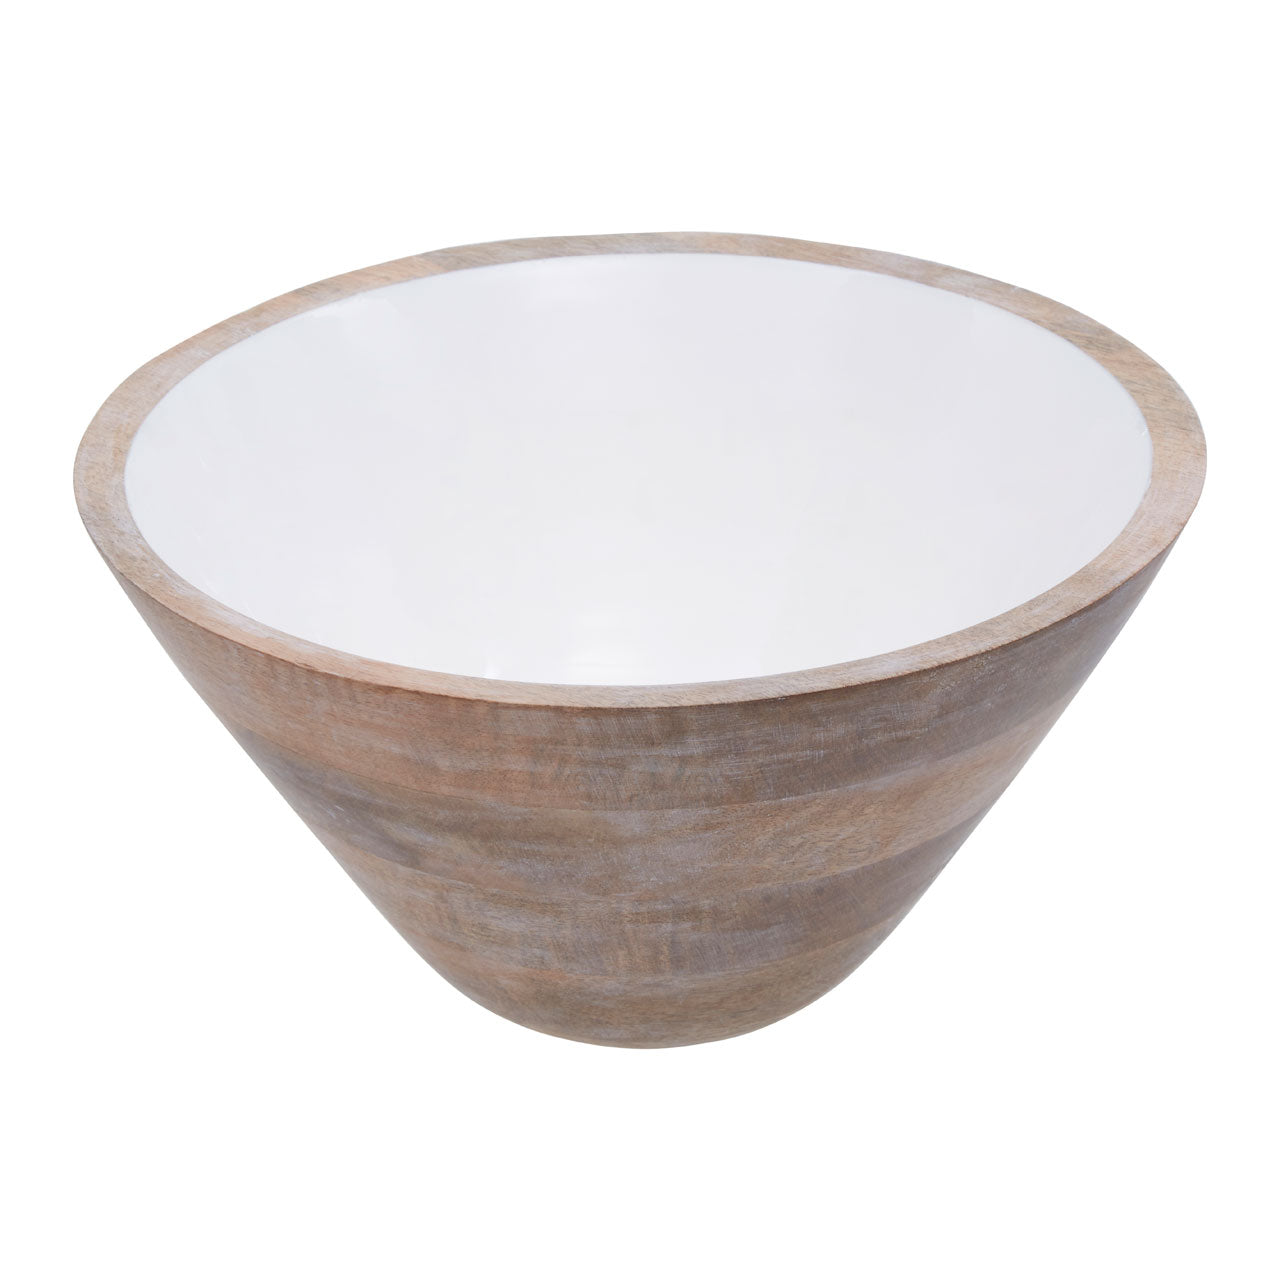 Olivias Kira Large Rounded Bowl In Natural White Enamel